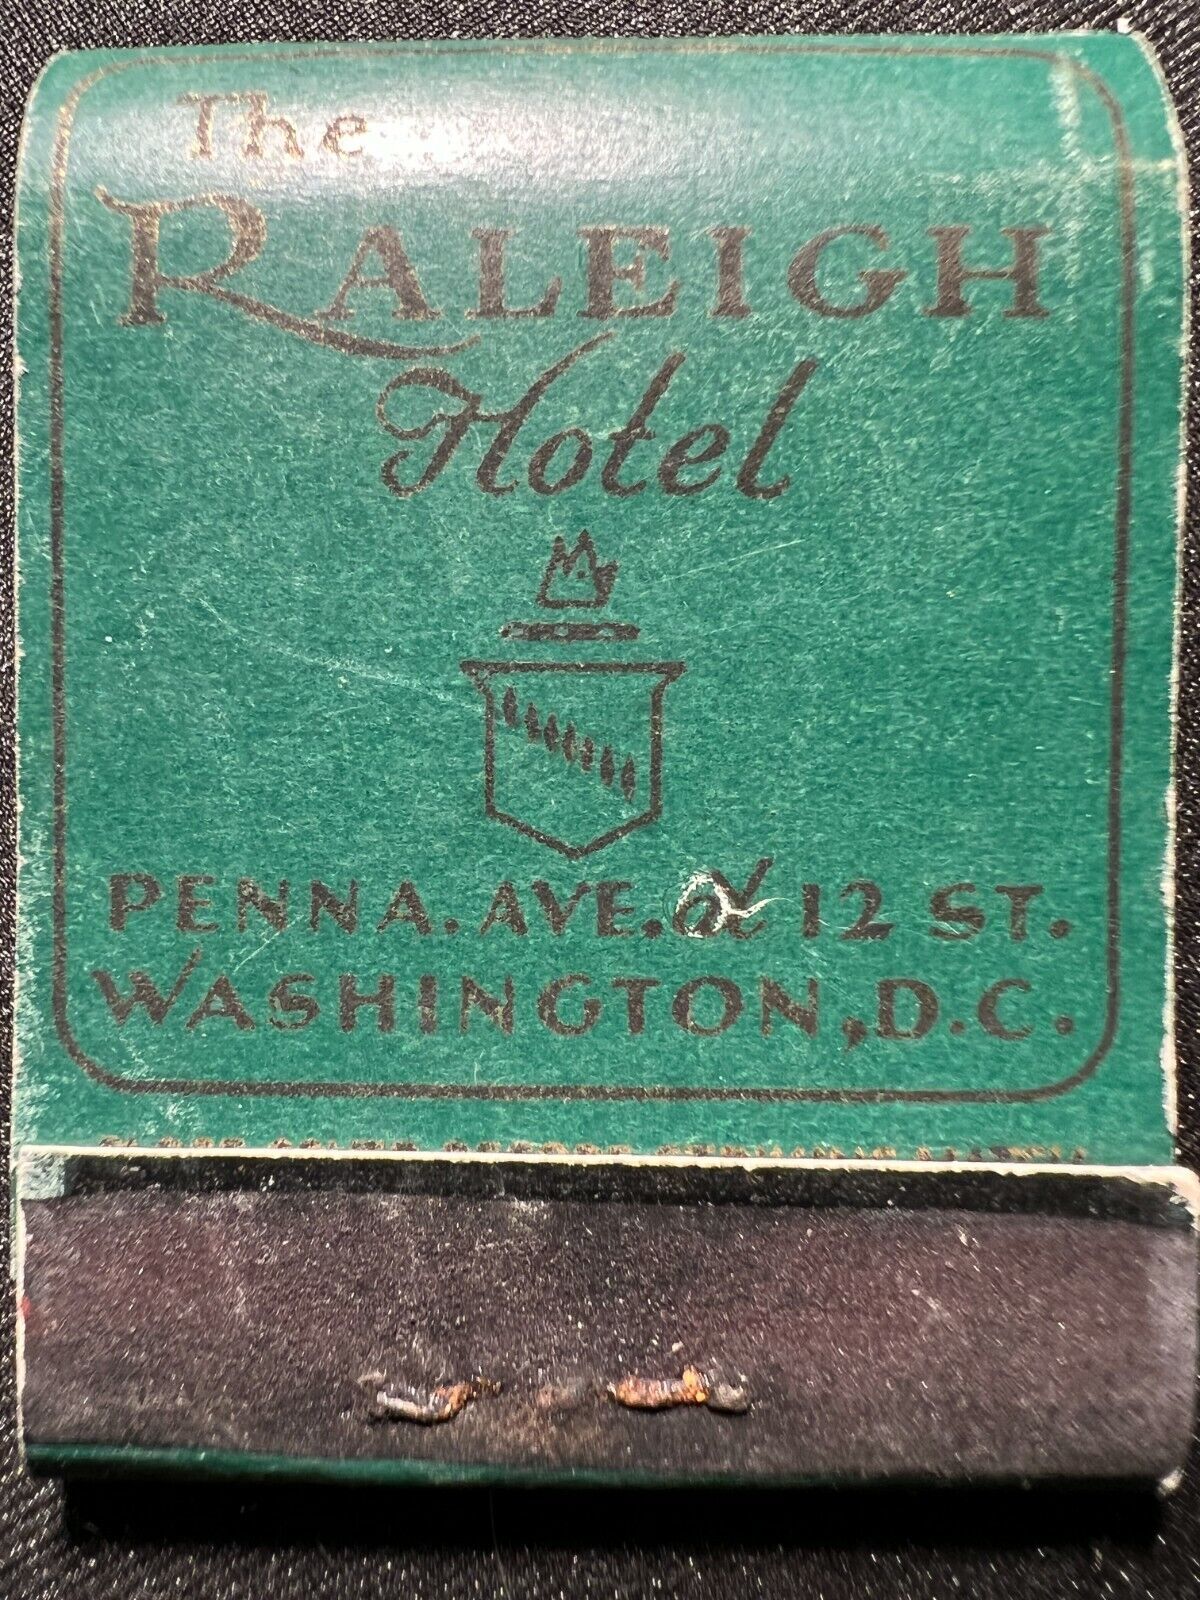 VINTAGE MATCHBOOK - THE RALEIGH HOTEL - WASHINGTON DC - UNSTRUCK VERY NICE